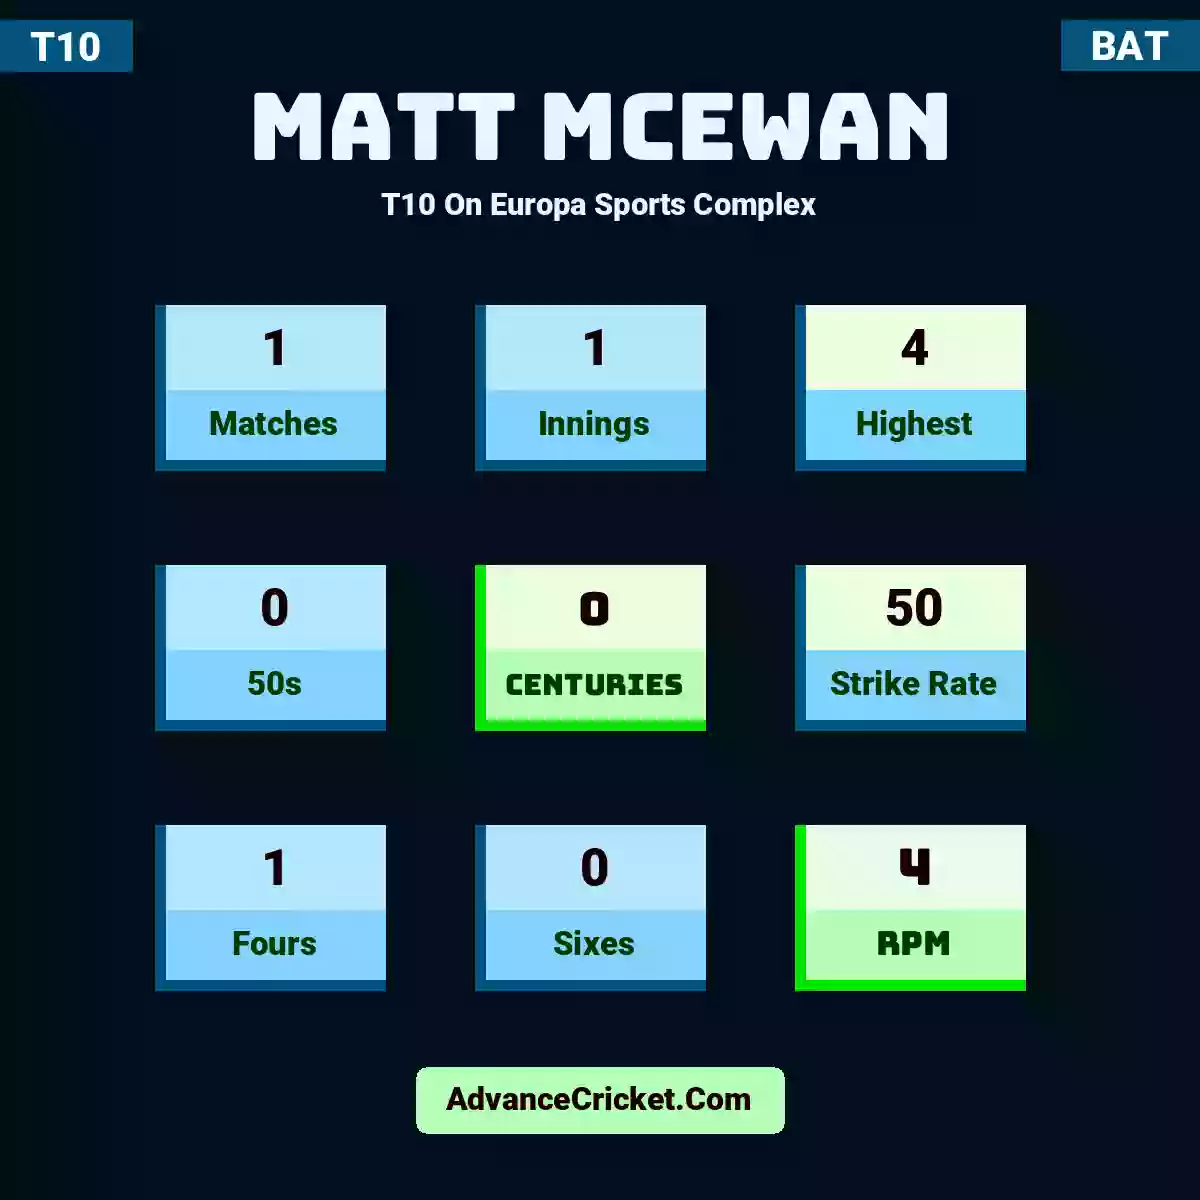 Matt McEwan T10  On Europa Sports Complex, Matt McEwan played 1 matches, scored 4 runs as highest, 0 half-centuries, and 0 centuries, with a strike rate of 50. M.McEwan hit 1 fours and 0 sixes, with an RPM of 4.